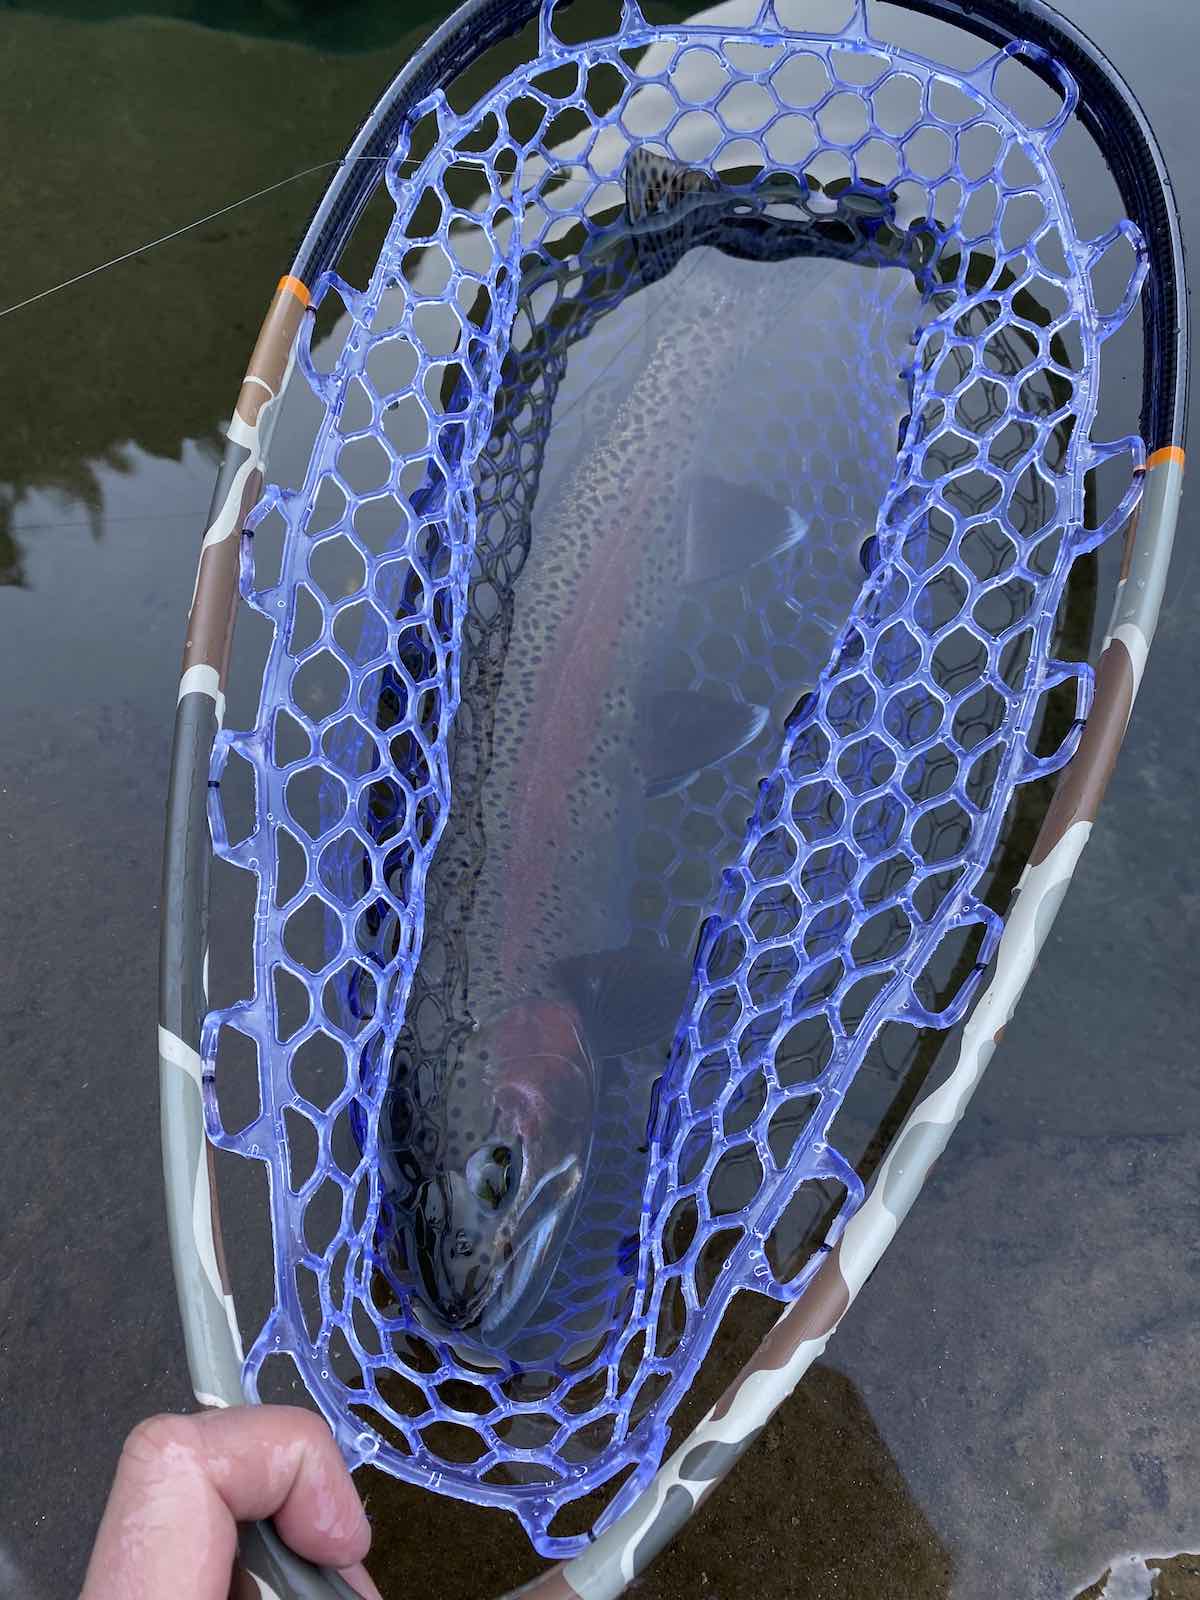 Rainbow trout landed in fishing net